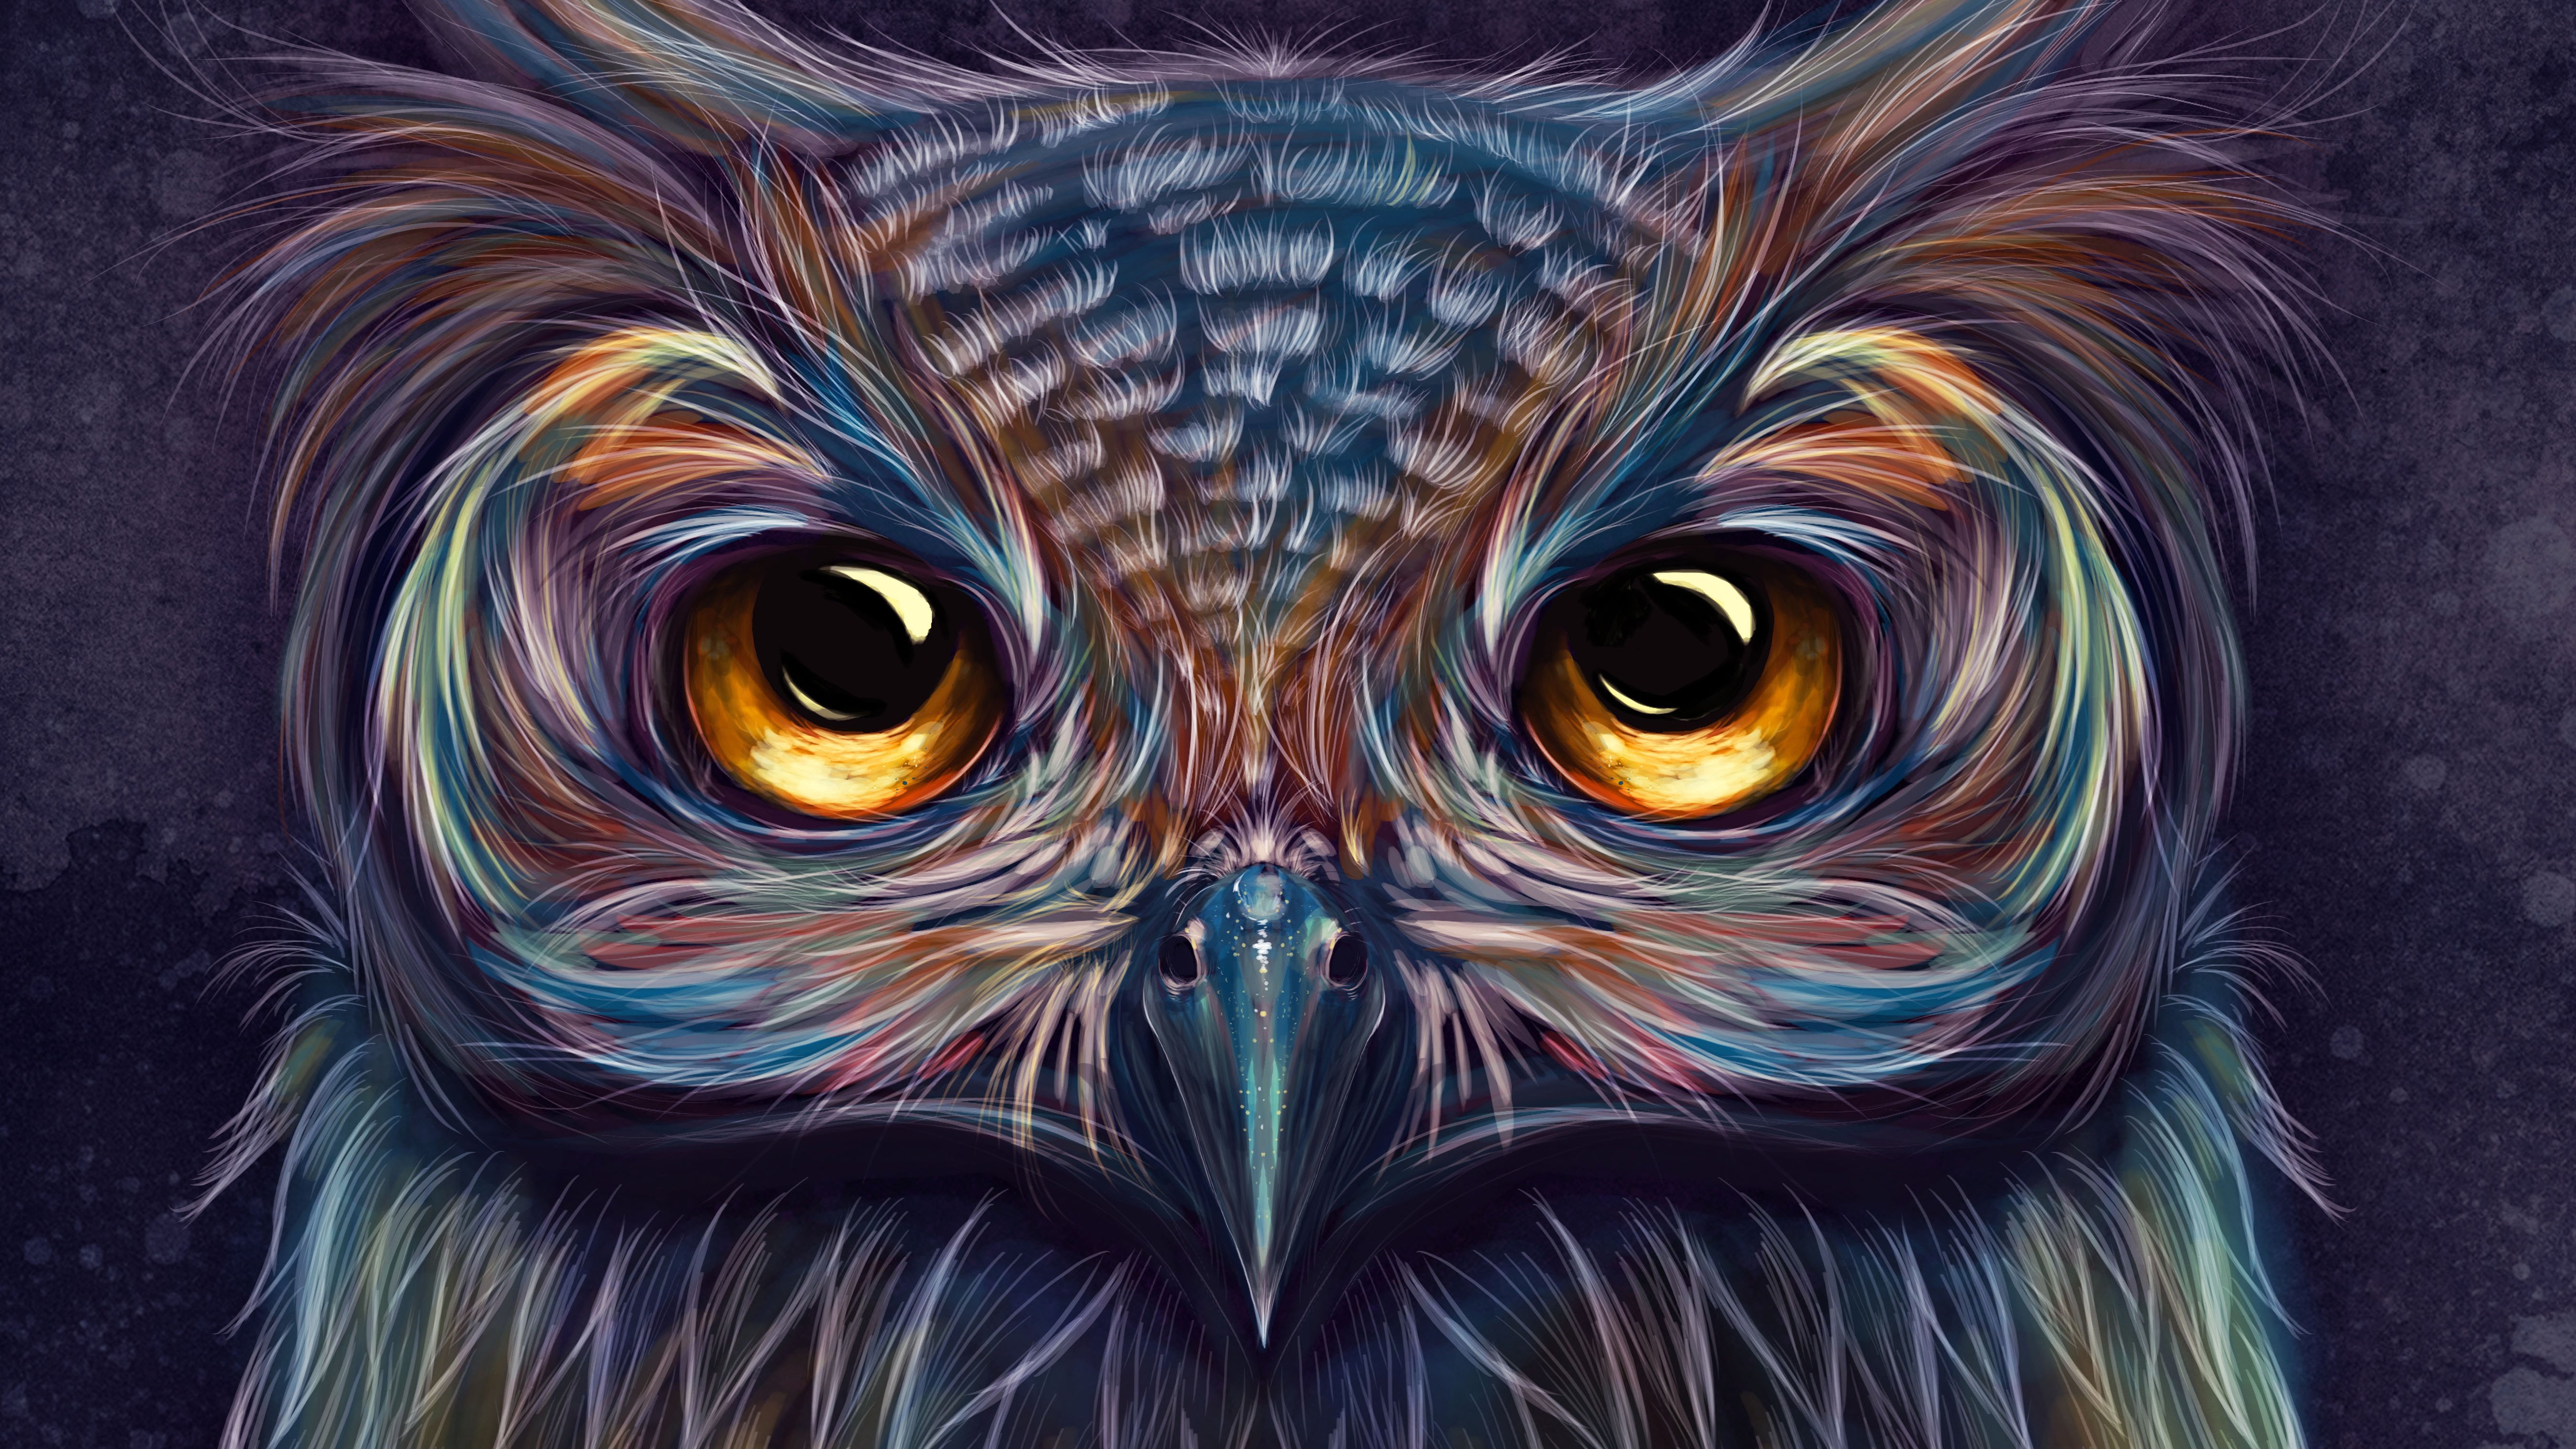 Wallpaper Owl of colors